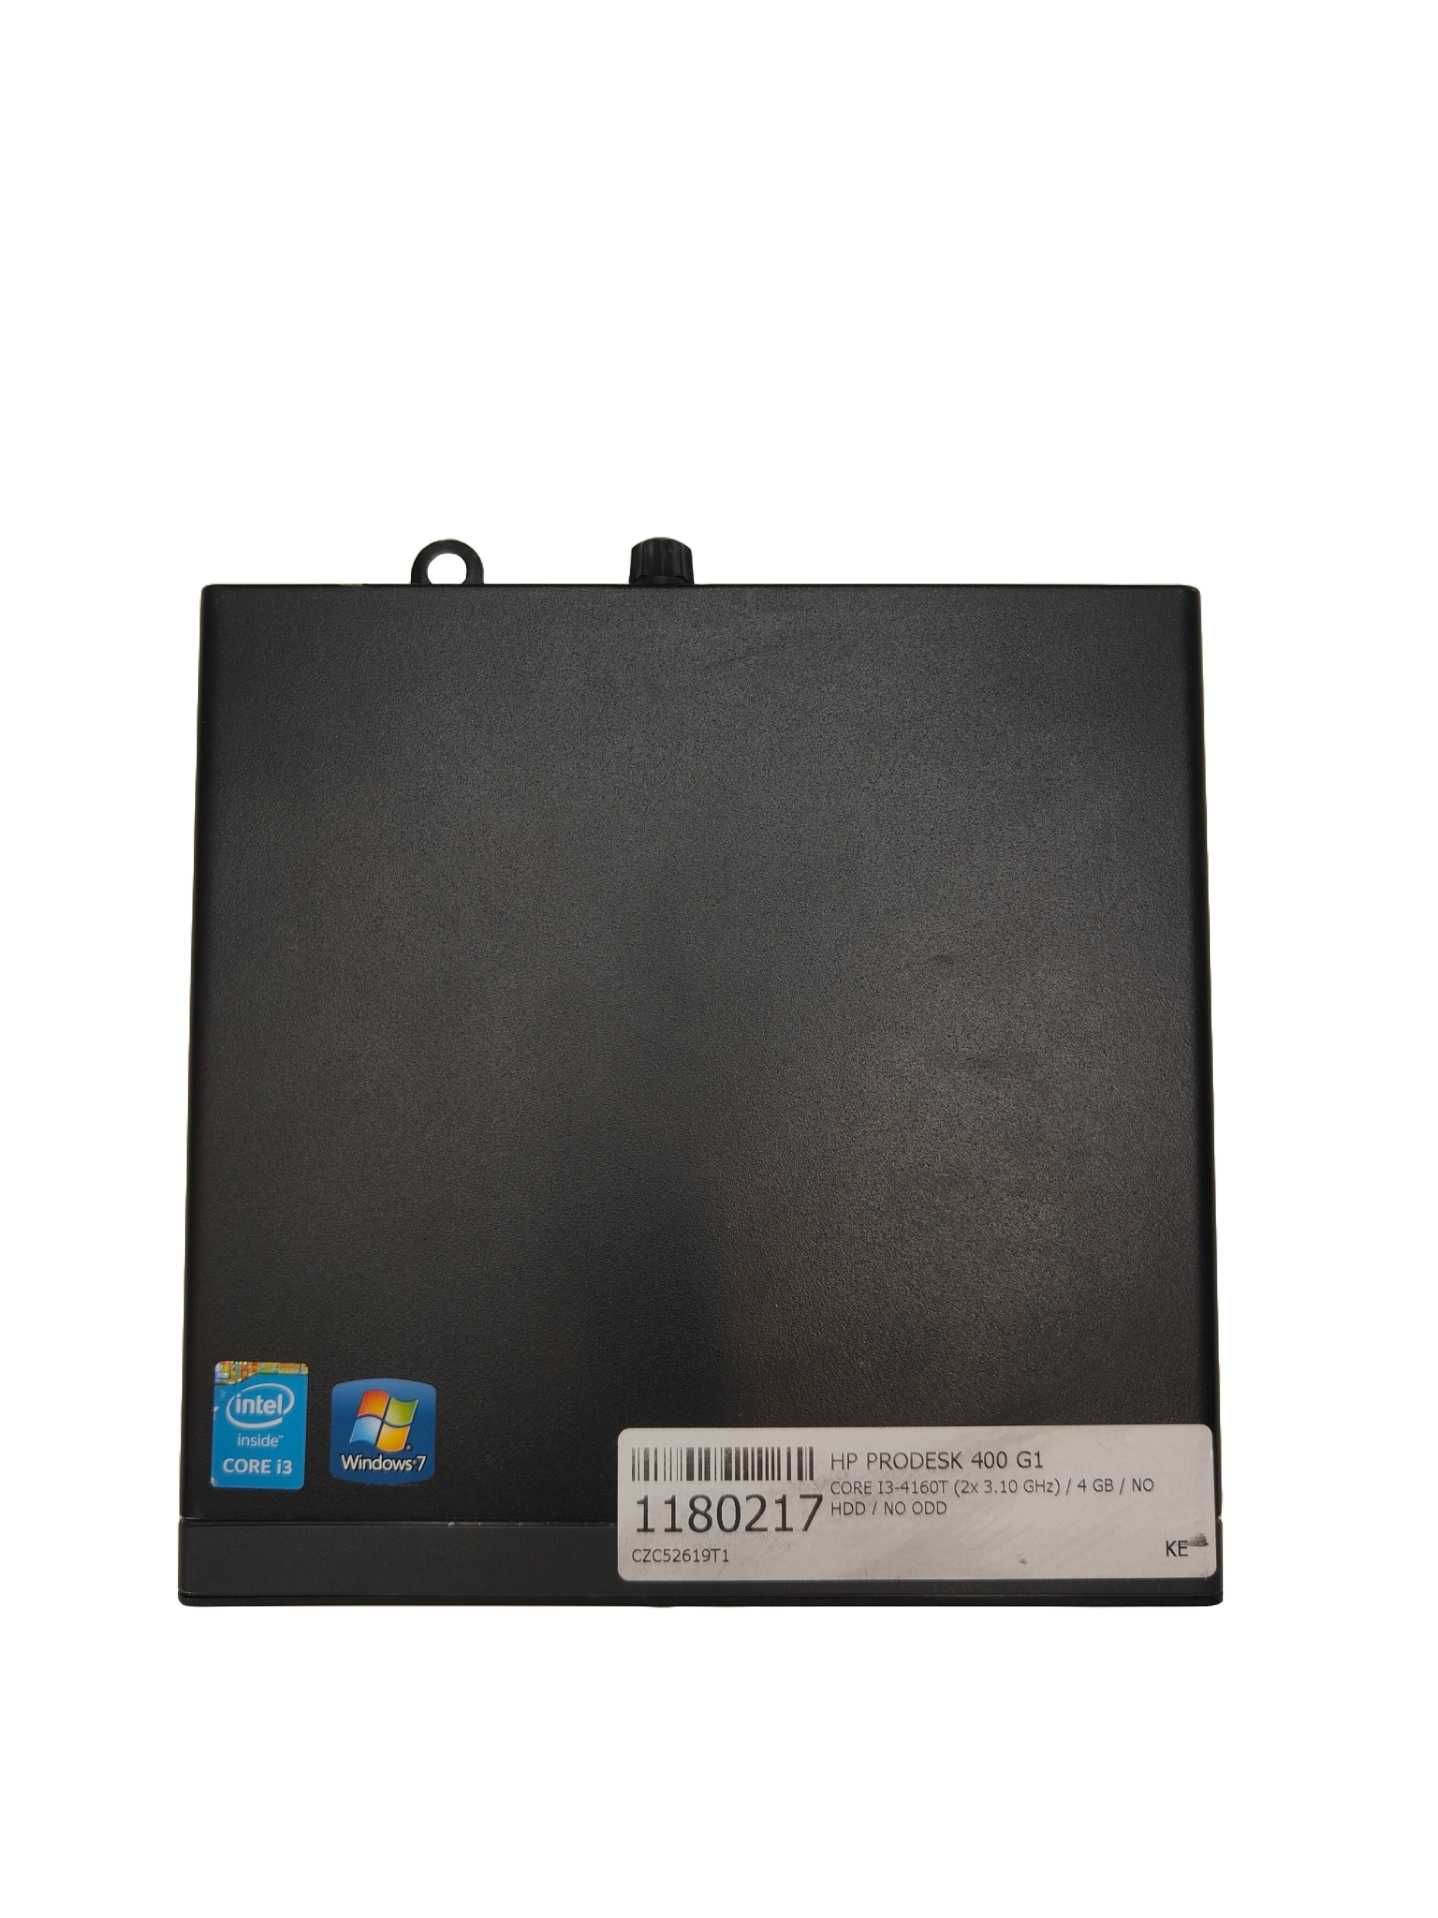 Mini PC Hp ProDesk 400 G1 Core I3-4160T 3.10 GHZ 4GB Ram